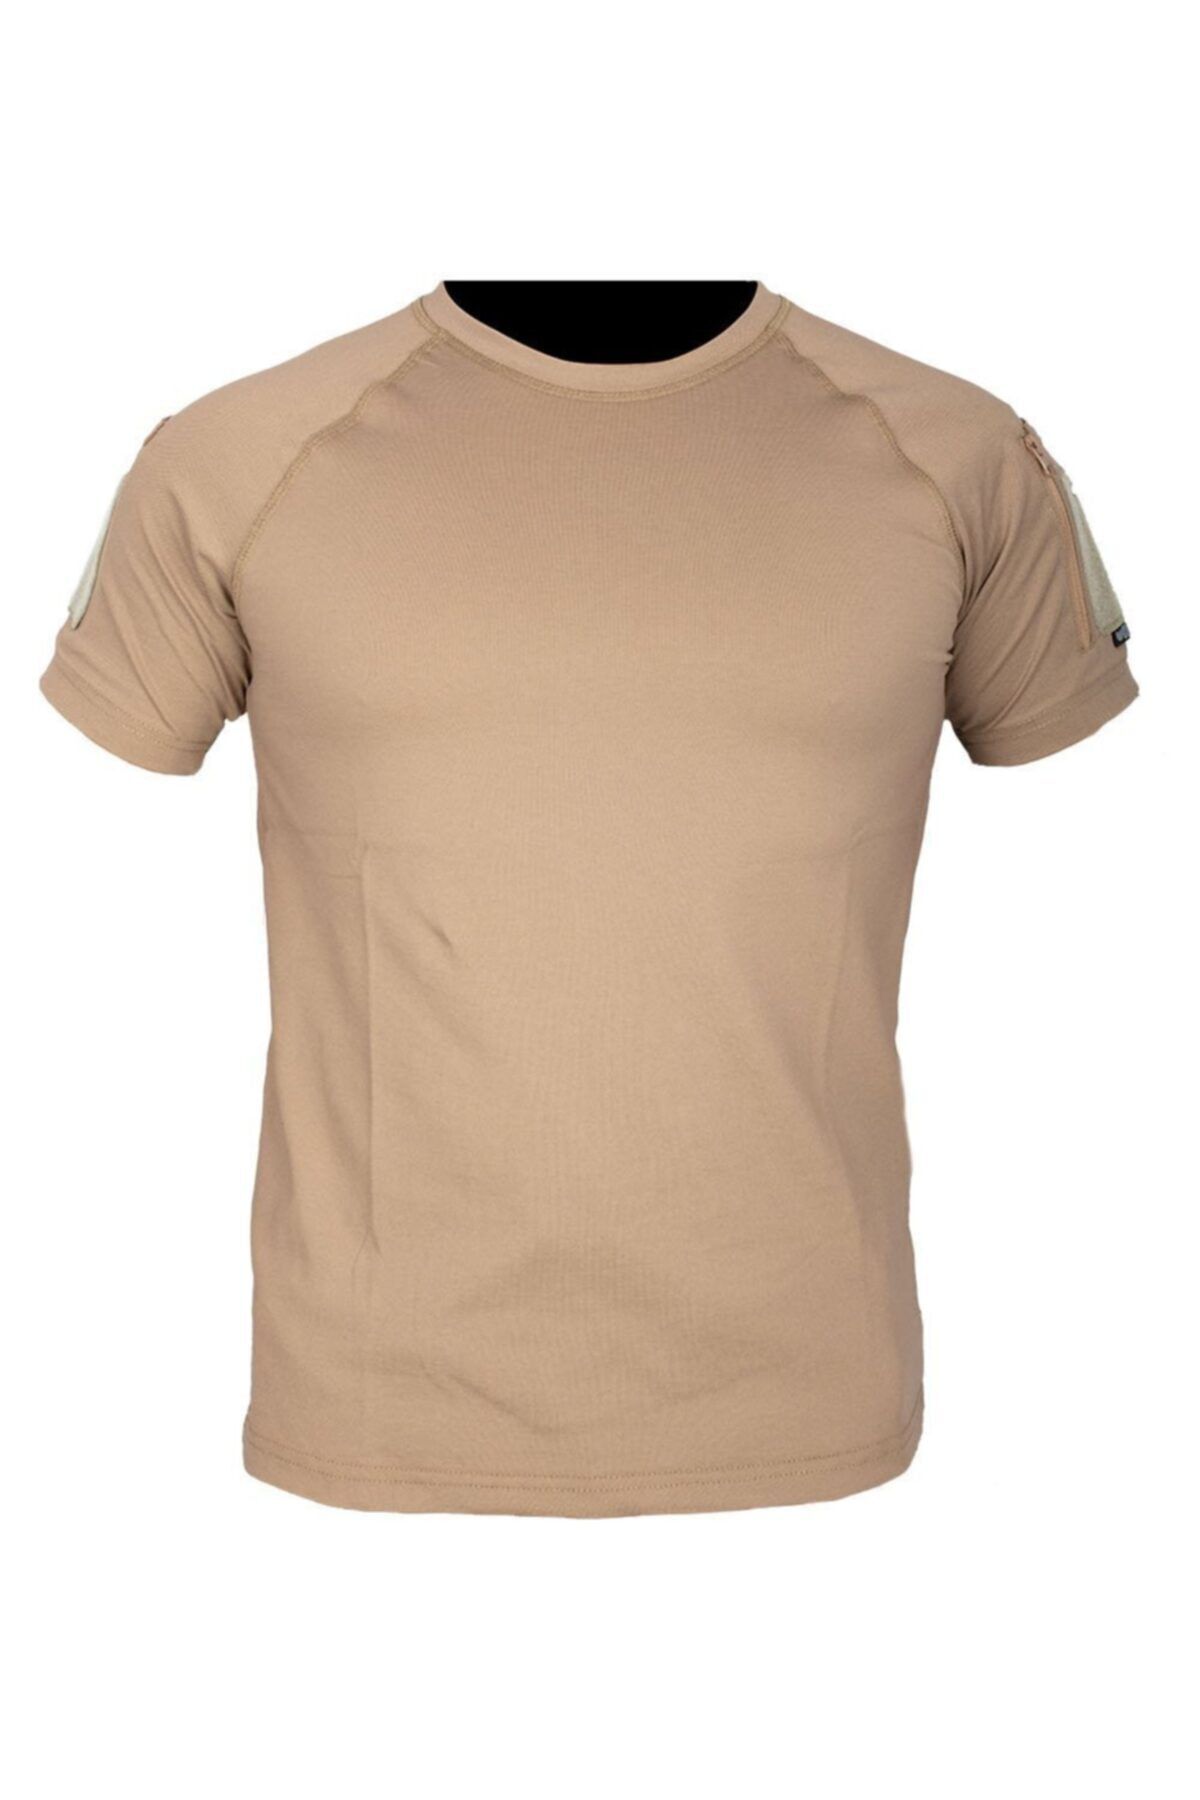 Safari Avm Taktikal Çöl Rengi Combat Tişört